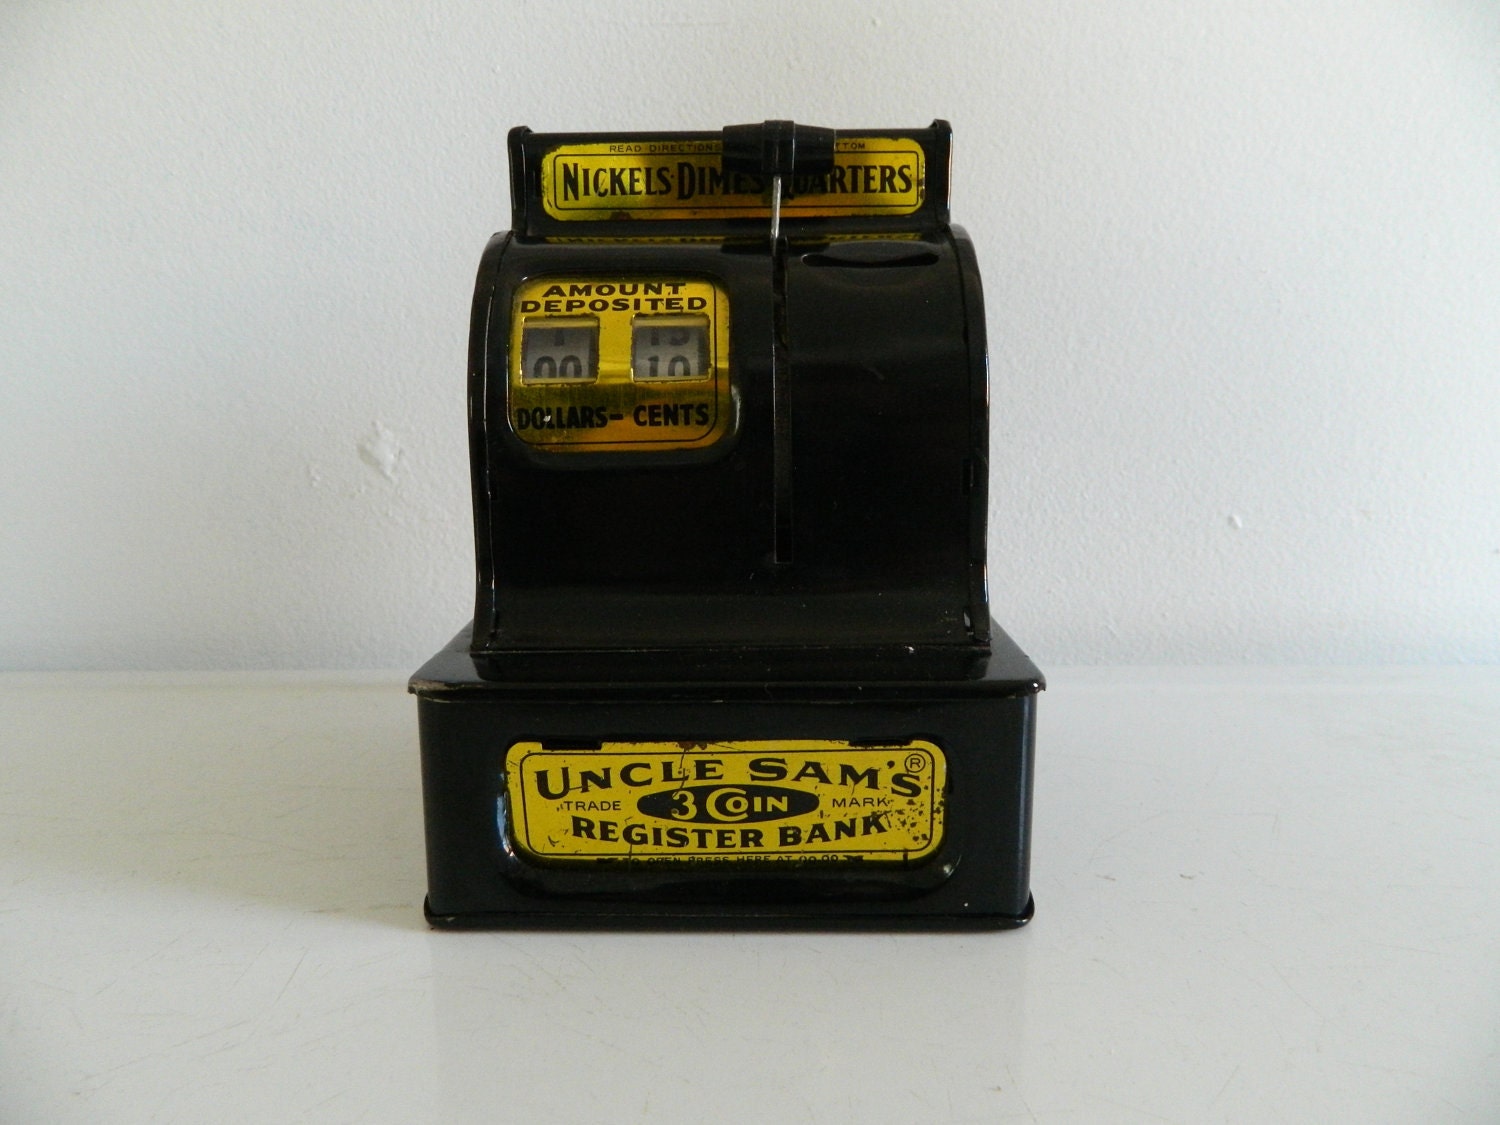 Black vintage coin bank toy